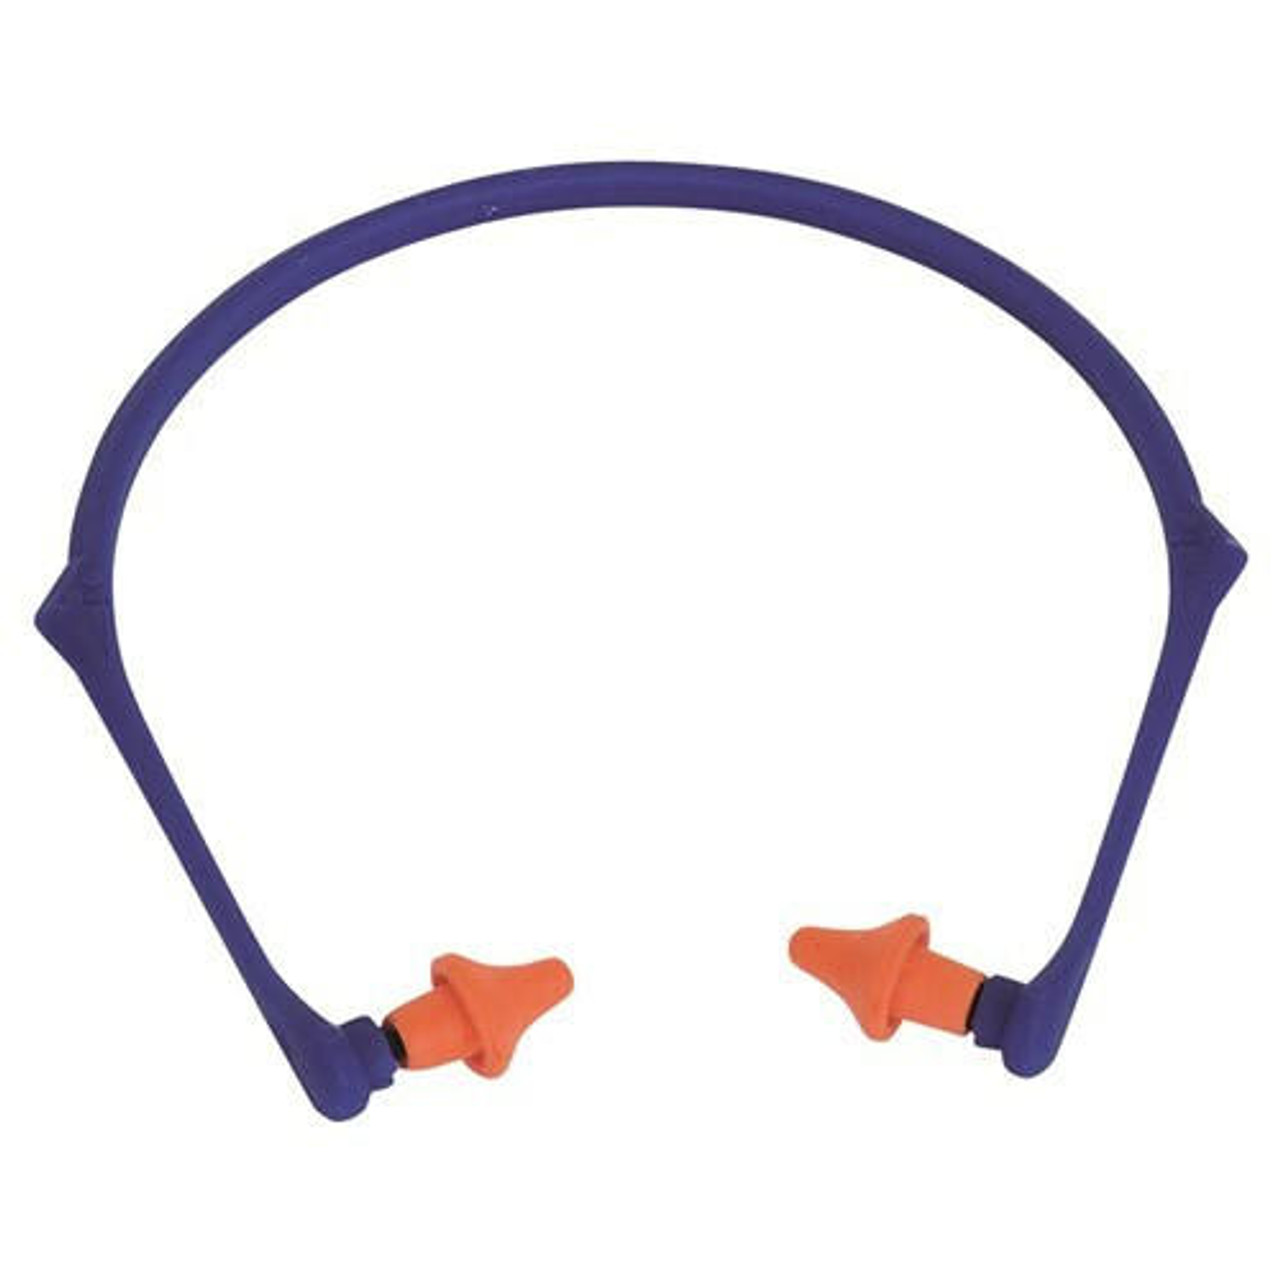 Pro Choice Safety Gear Pro Choice Proband Headband Earplugs Class 2 14 DB HBEP